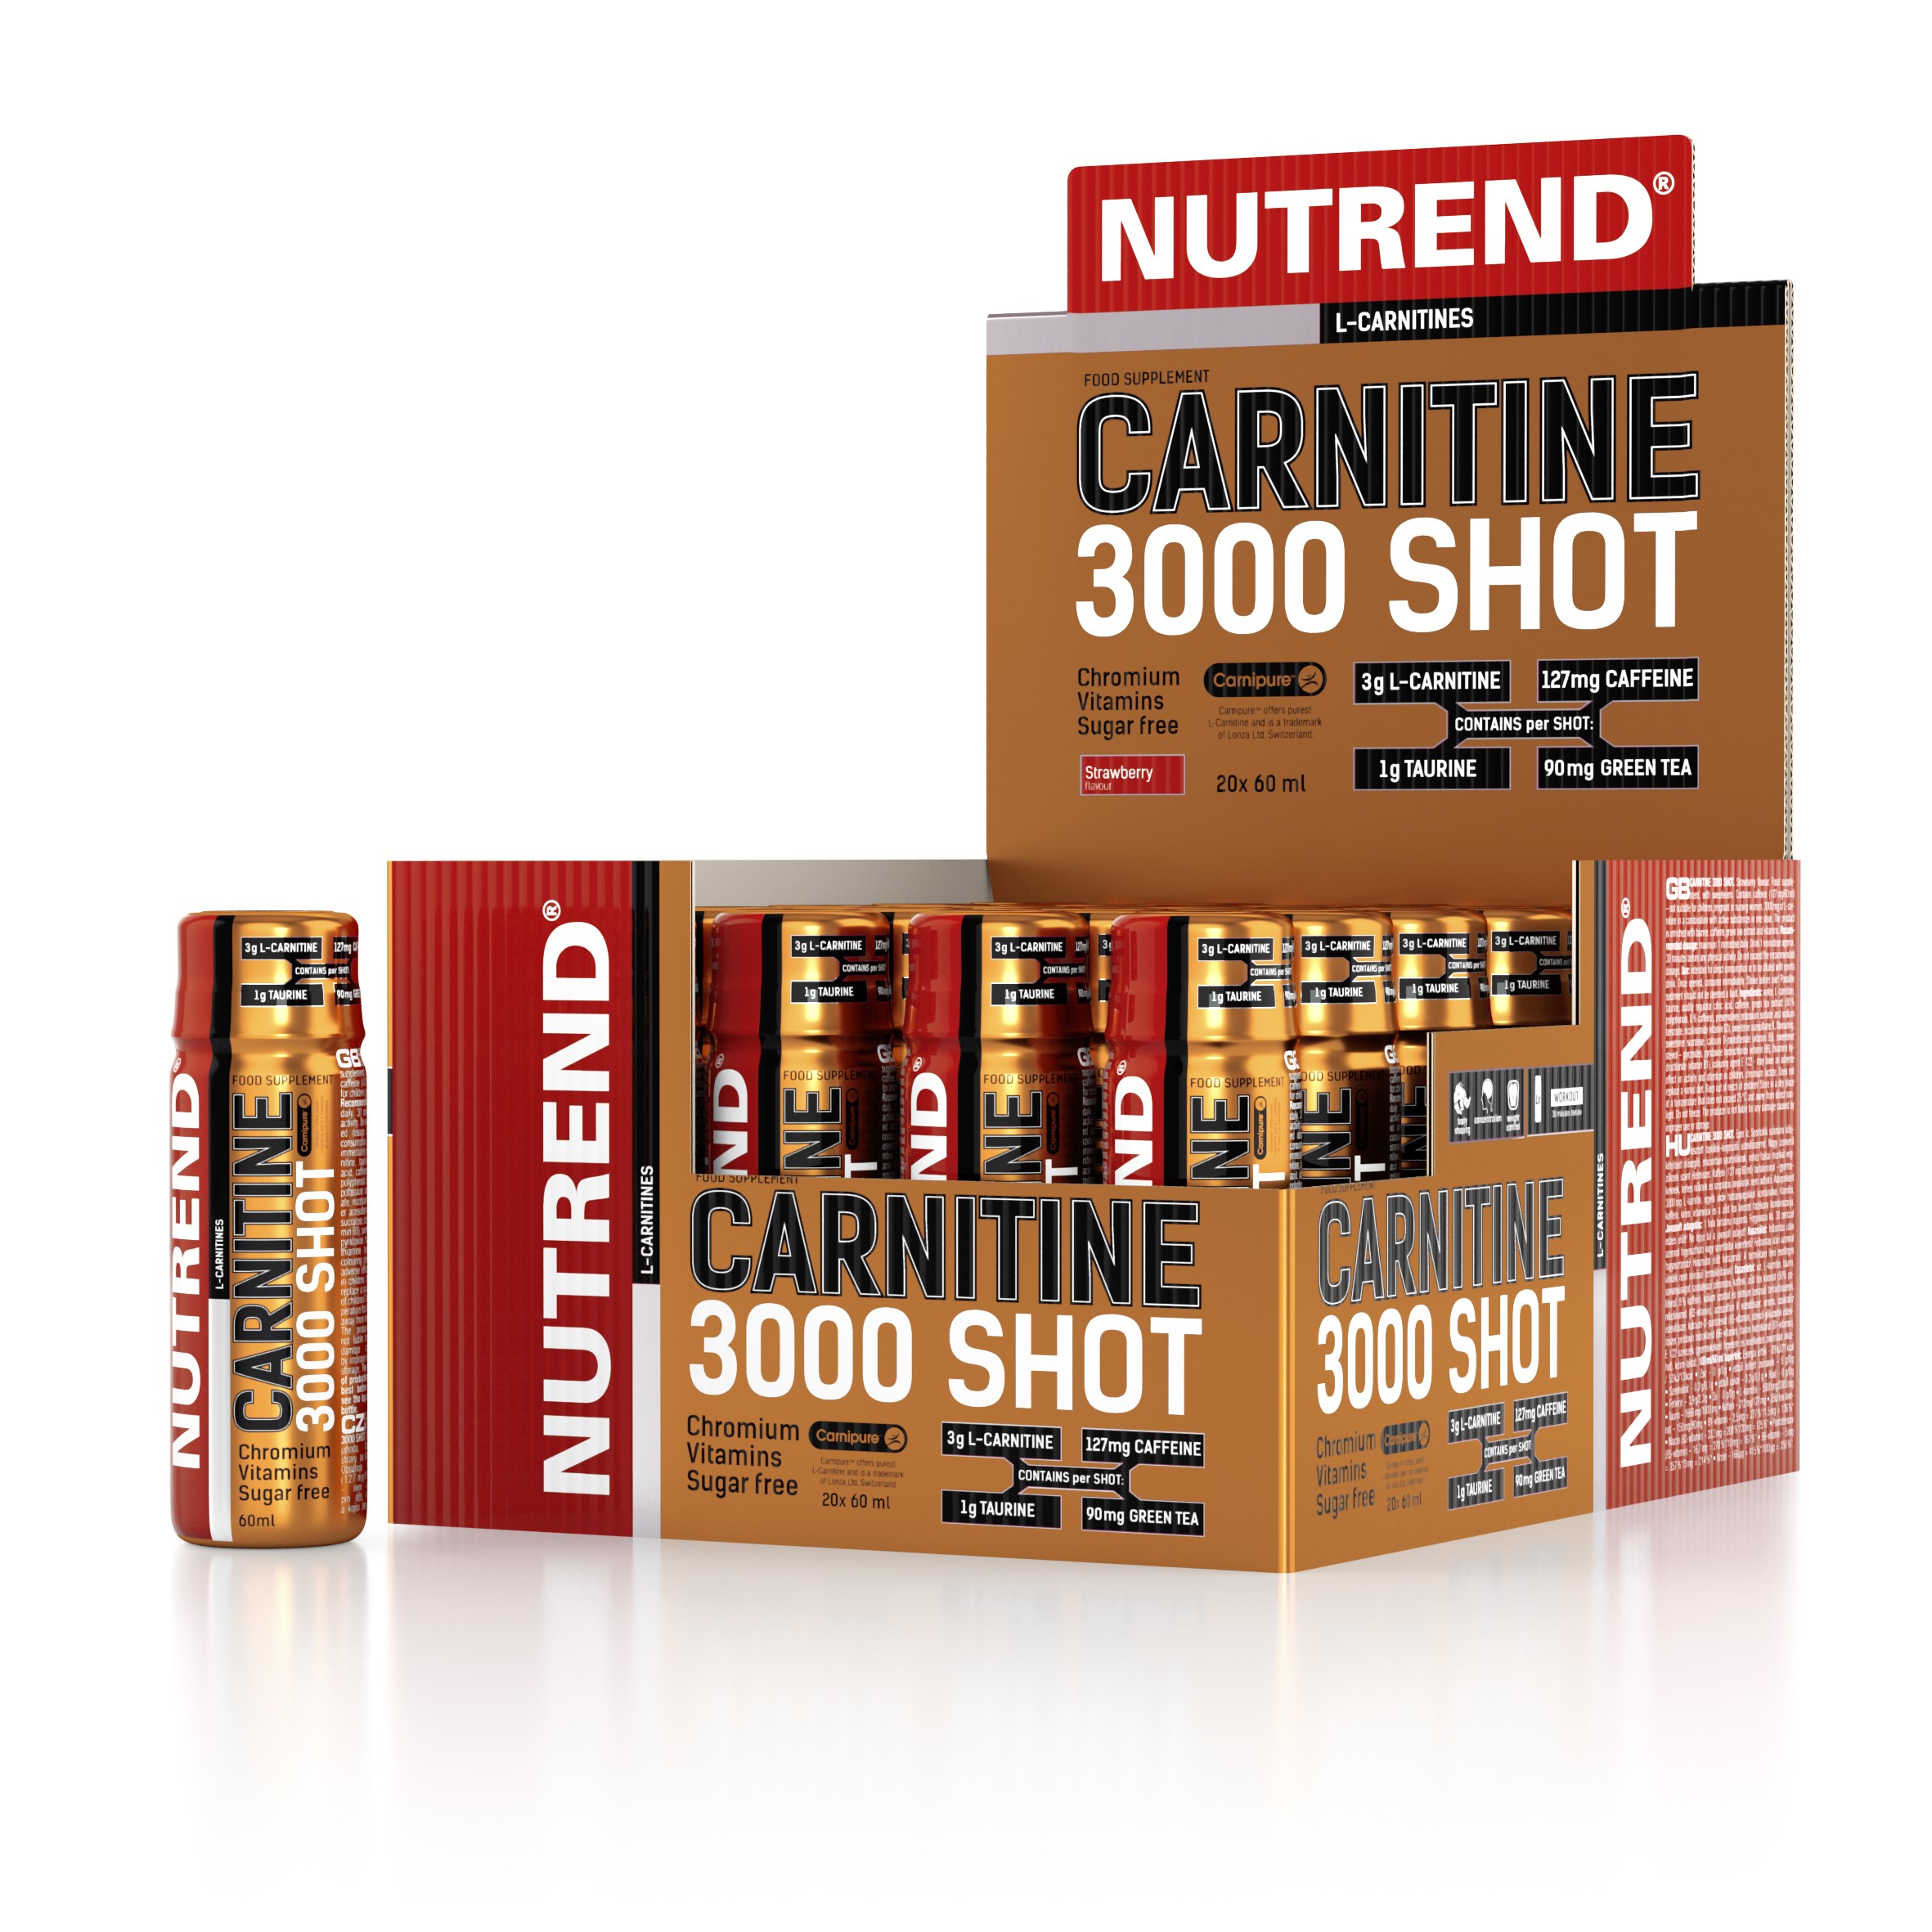 L-Carnitina - CARNITINE 3000 SHOT 60 ml Strawberry, https:0769429911.websales.ro